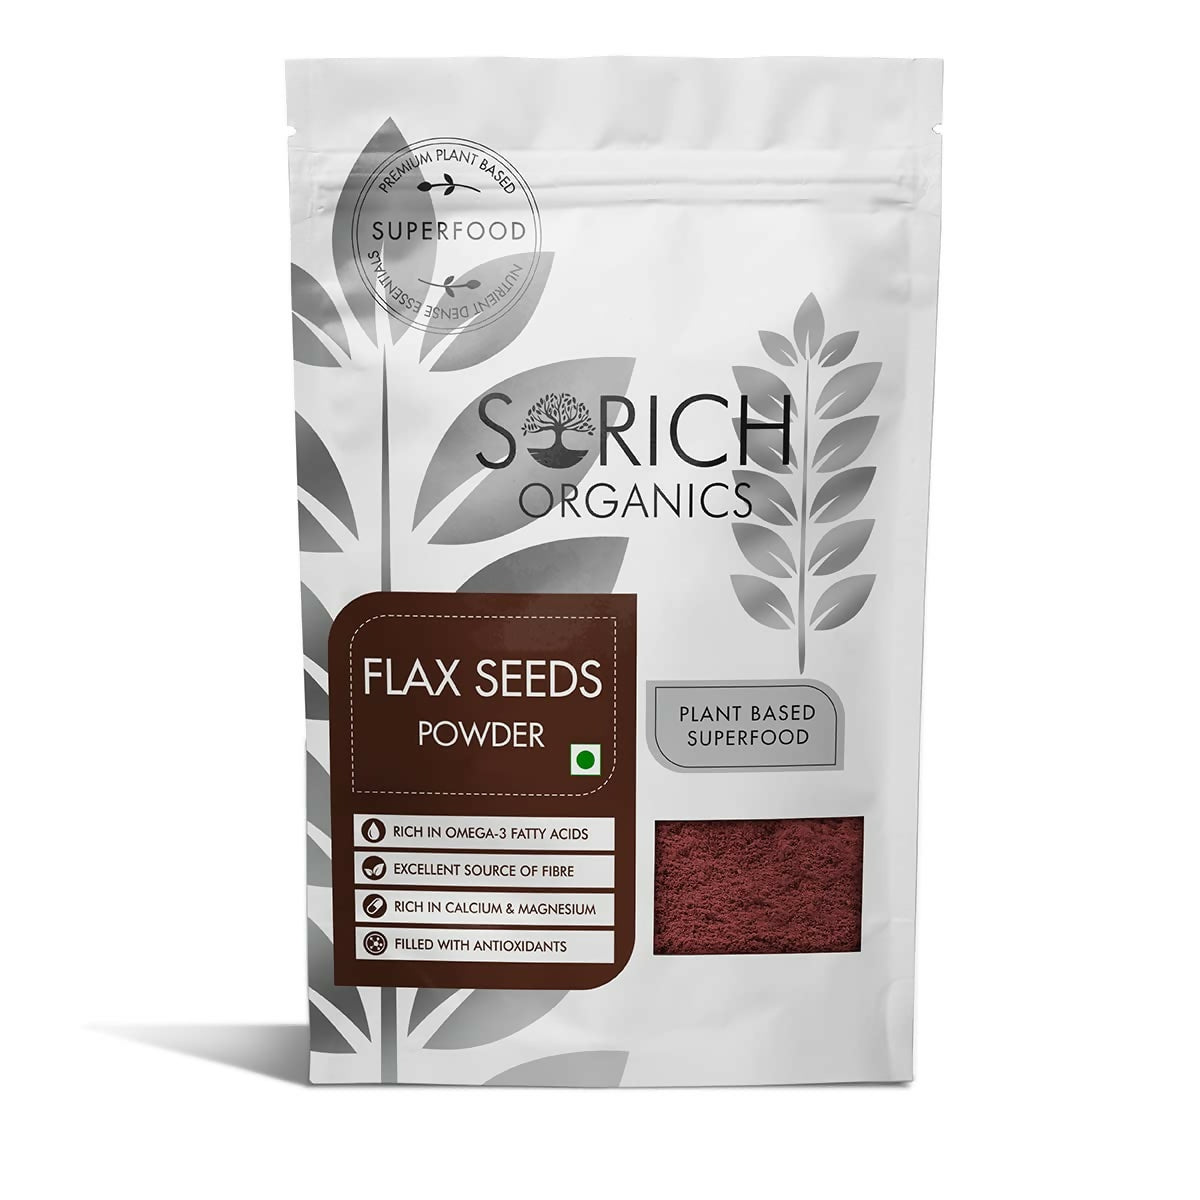 Sorich Organics Cold Milled Flax Seeds Powder - BUDNE